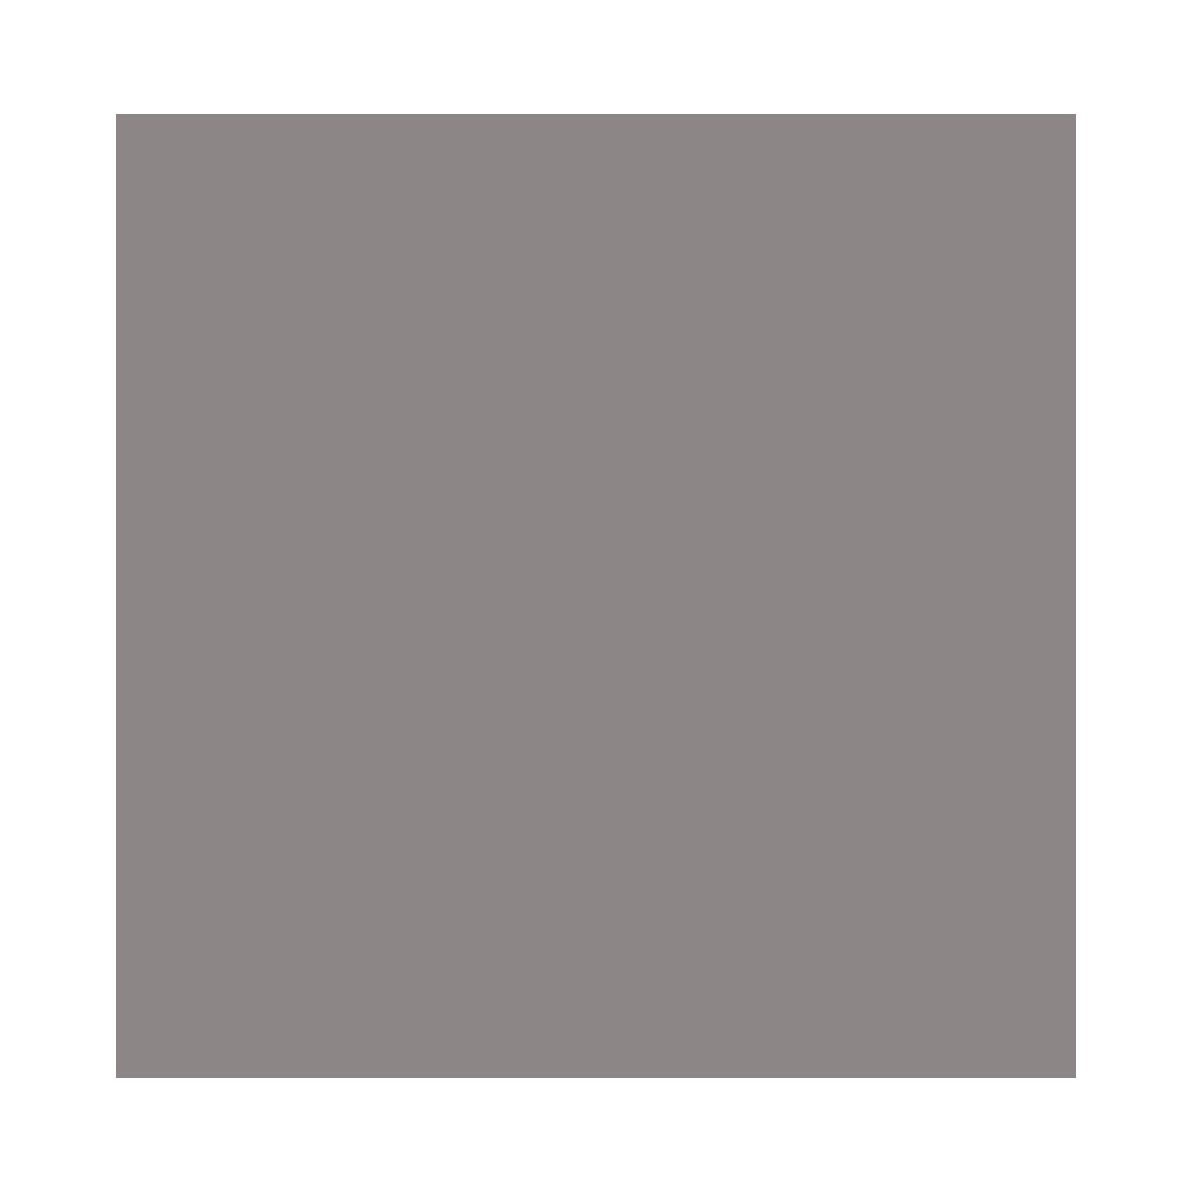 Clairefontaine Pastelmat - Dark Grey 50 cm x 70 cm, 360 gsm